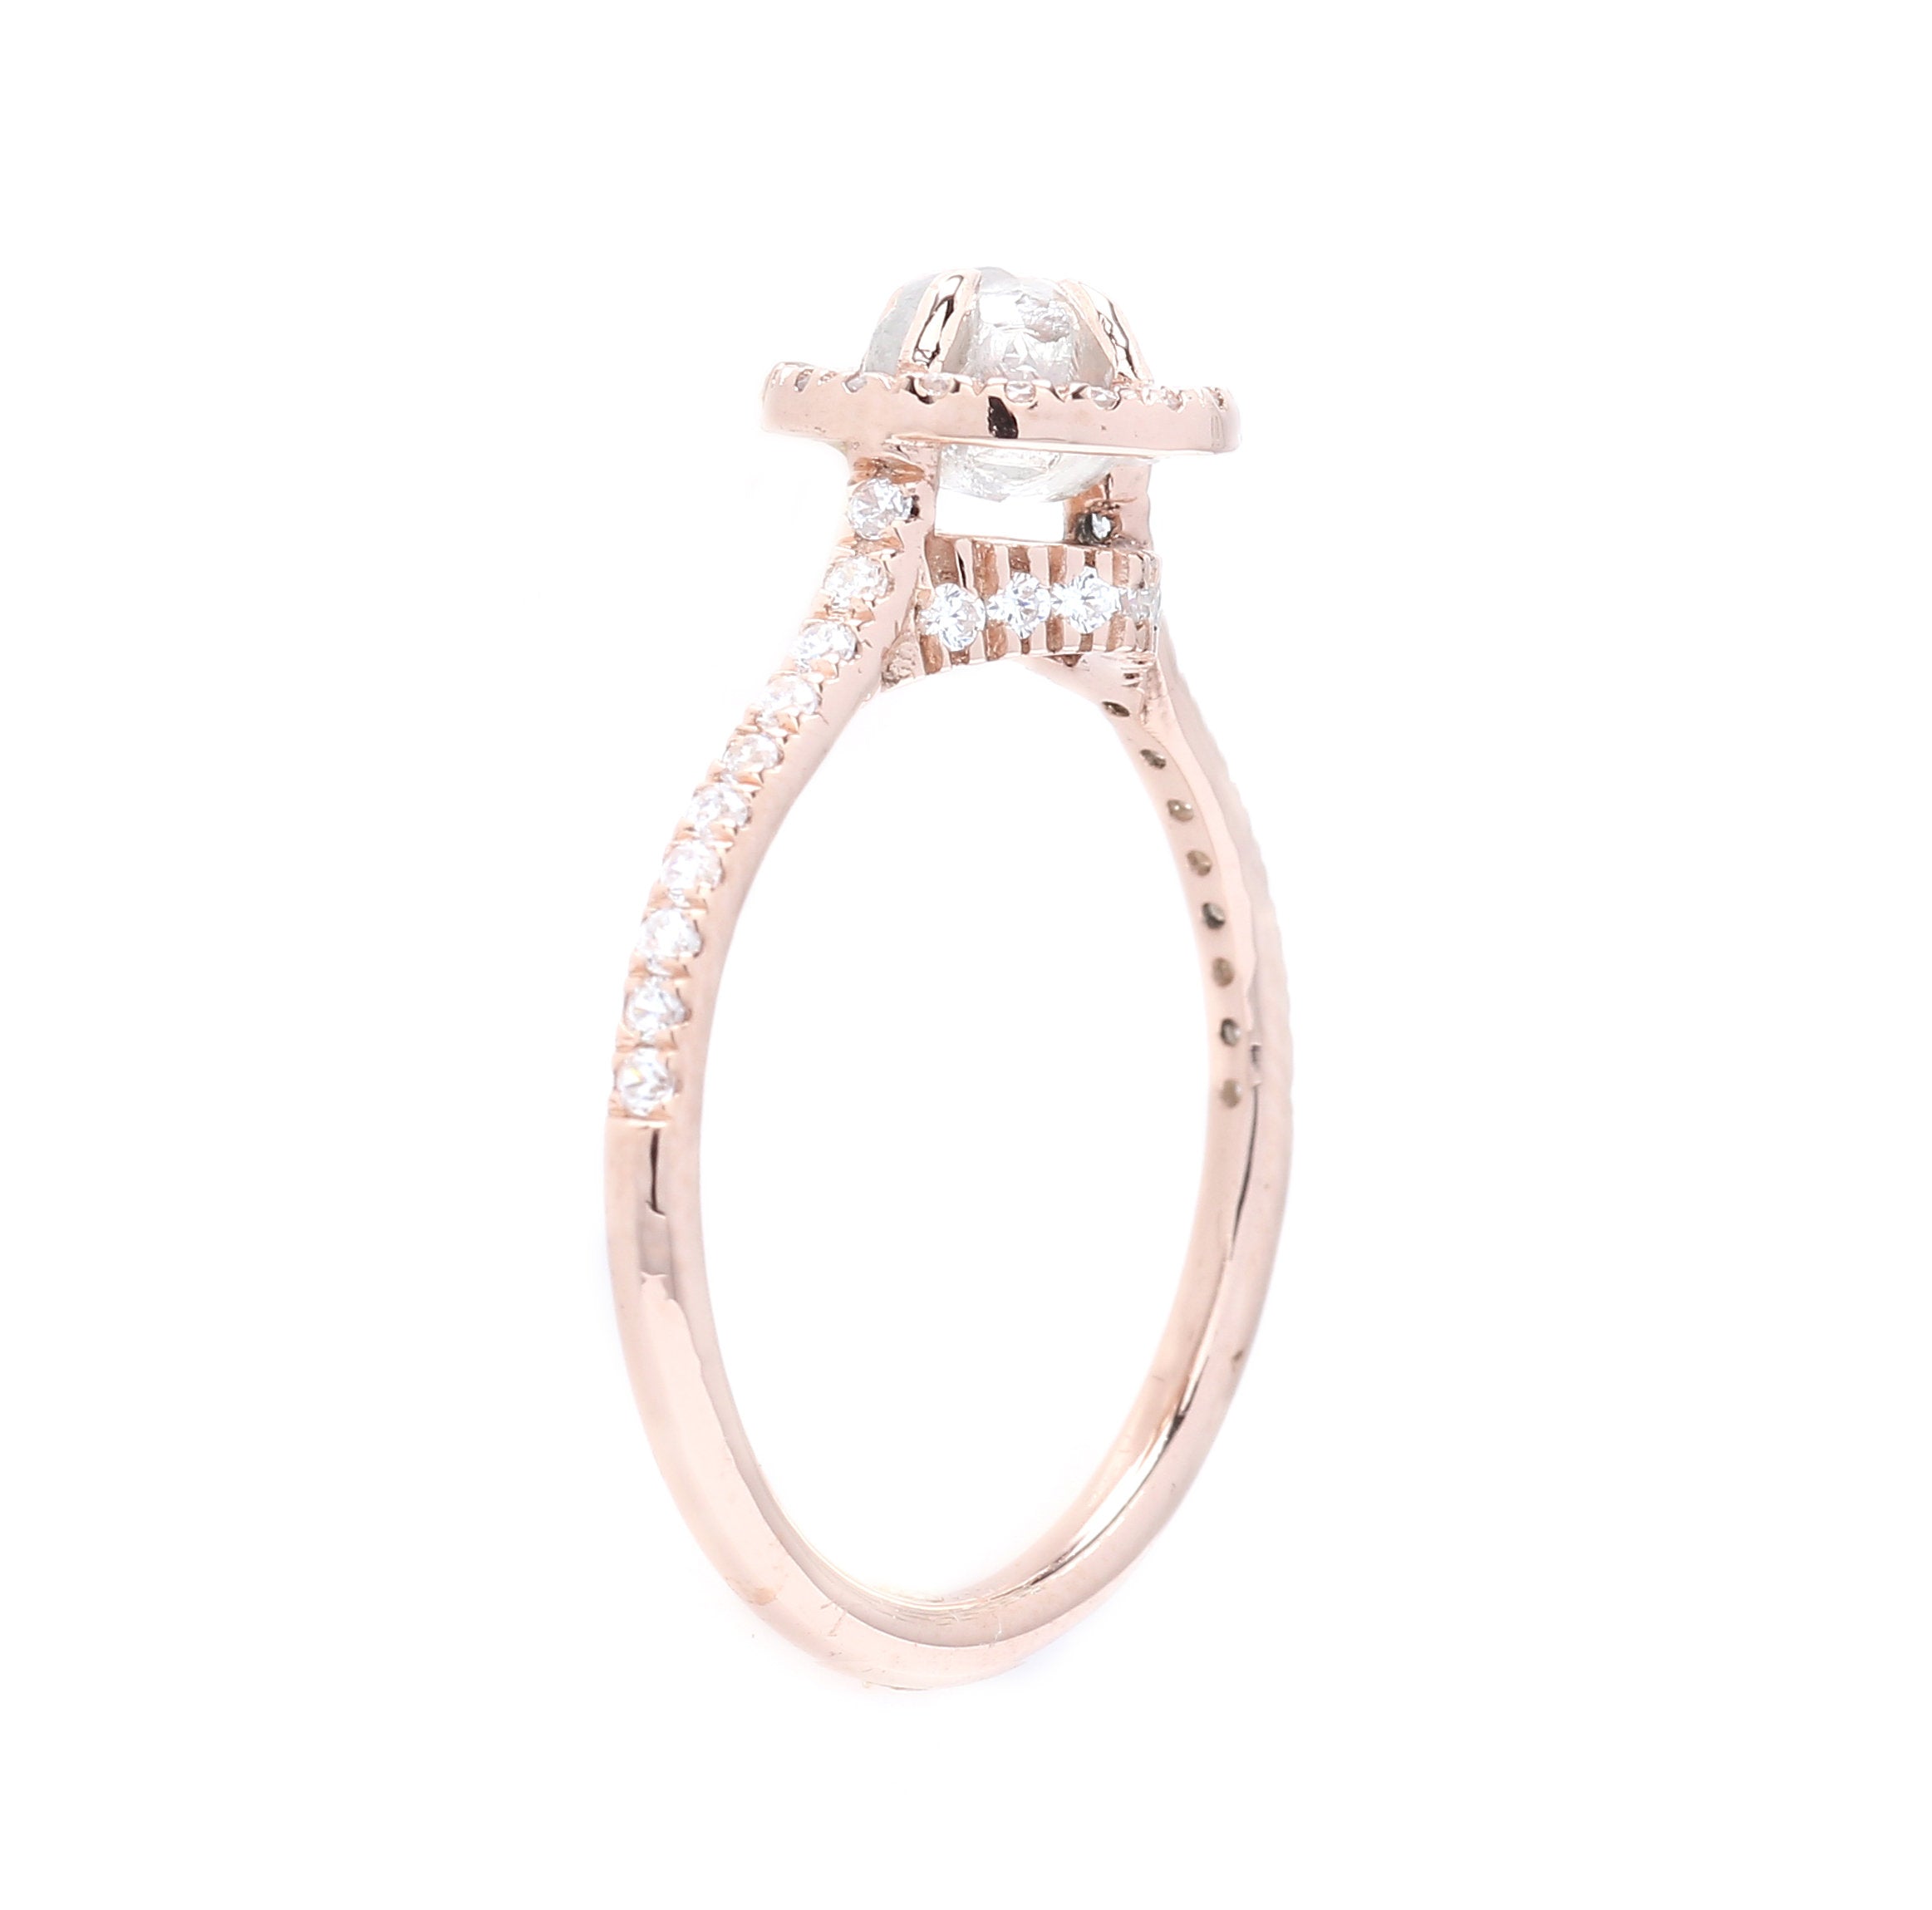 Grey Rough Diamond 14K Solid Rose White Yellow Gold Ring Engagement Wedding Gift Ring KD850